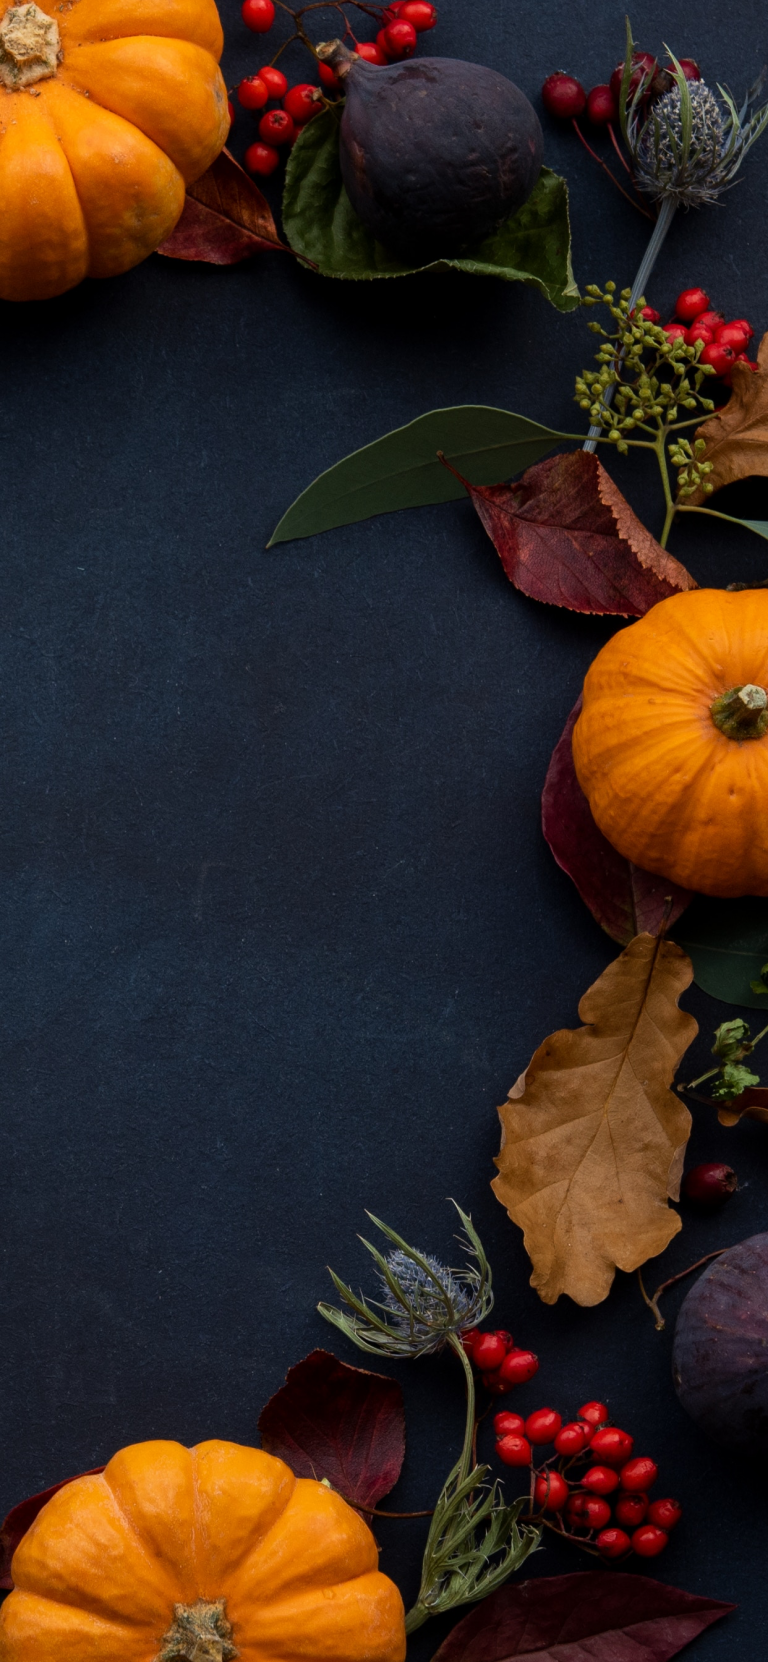 Pumpkin wallpaper for iPhone: download them now!. Pumpkin wallpaper, Thanksgiving iphone wallpaper, Fall wallpaper